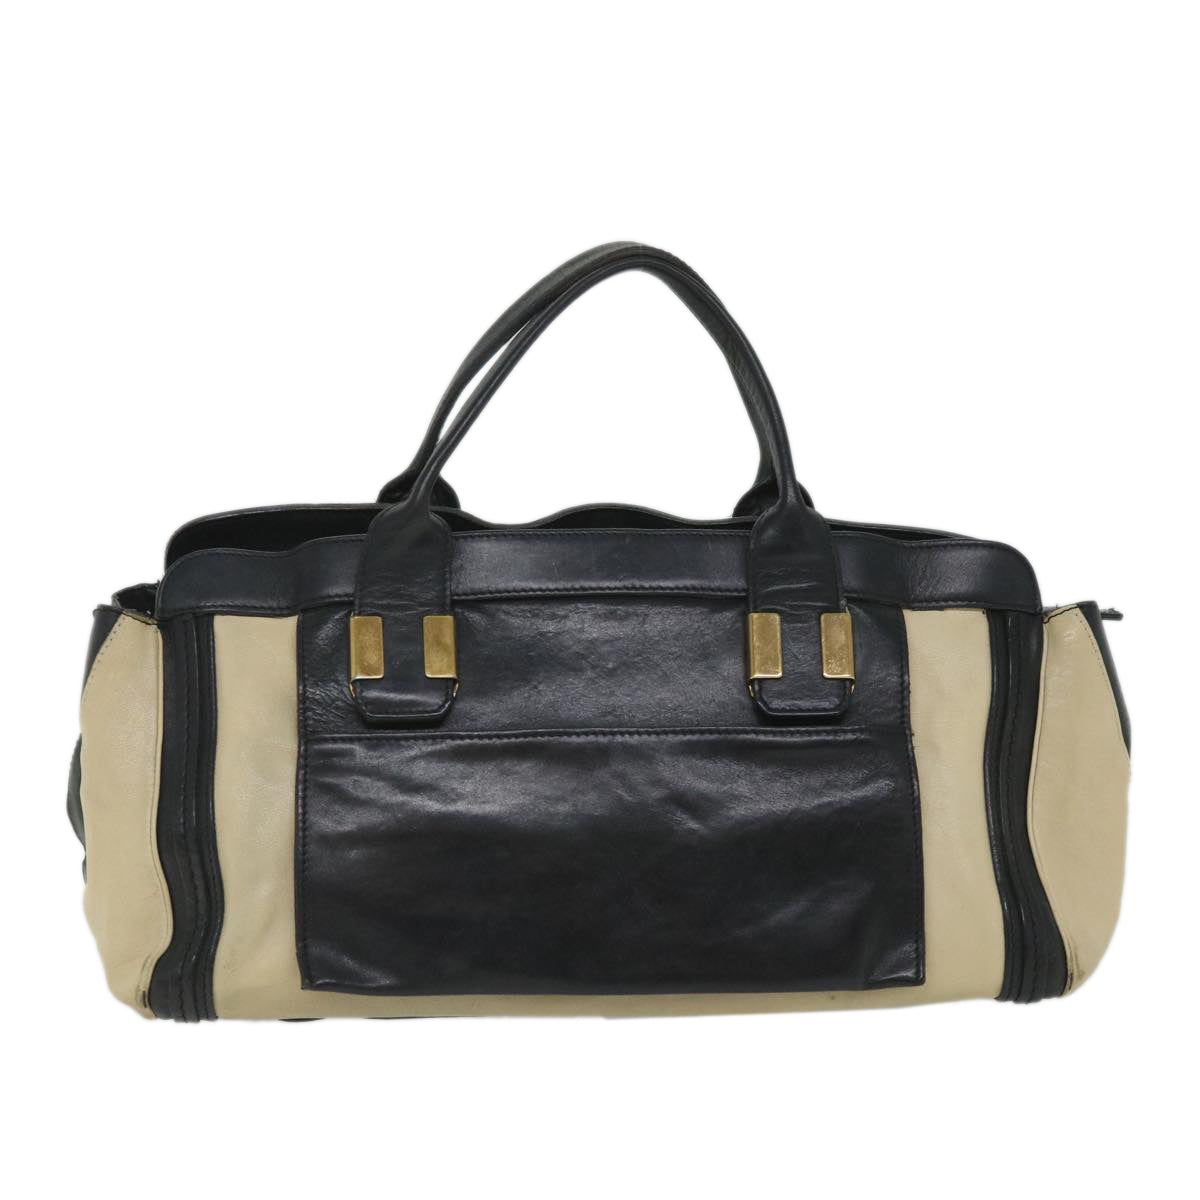 Chloe Hand Bag Leather Beige Black 01 13 62 65 Auth bs9176 - 0